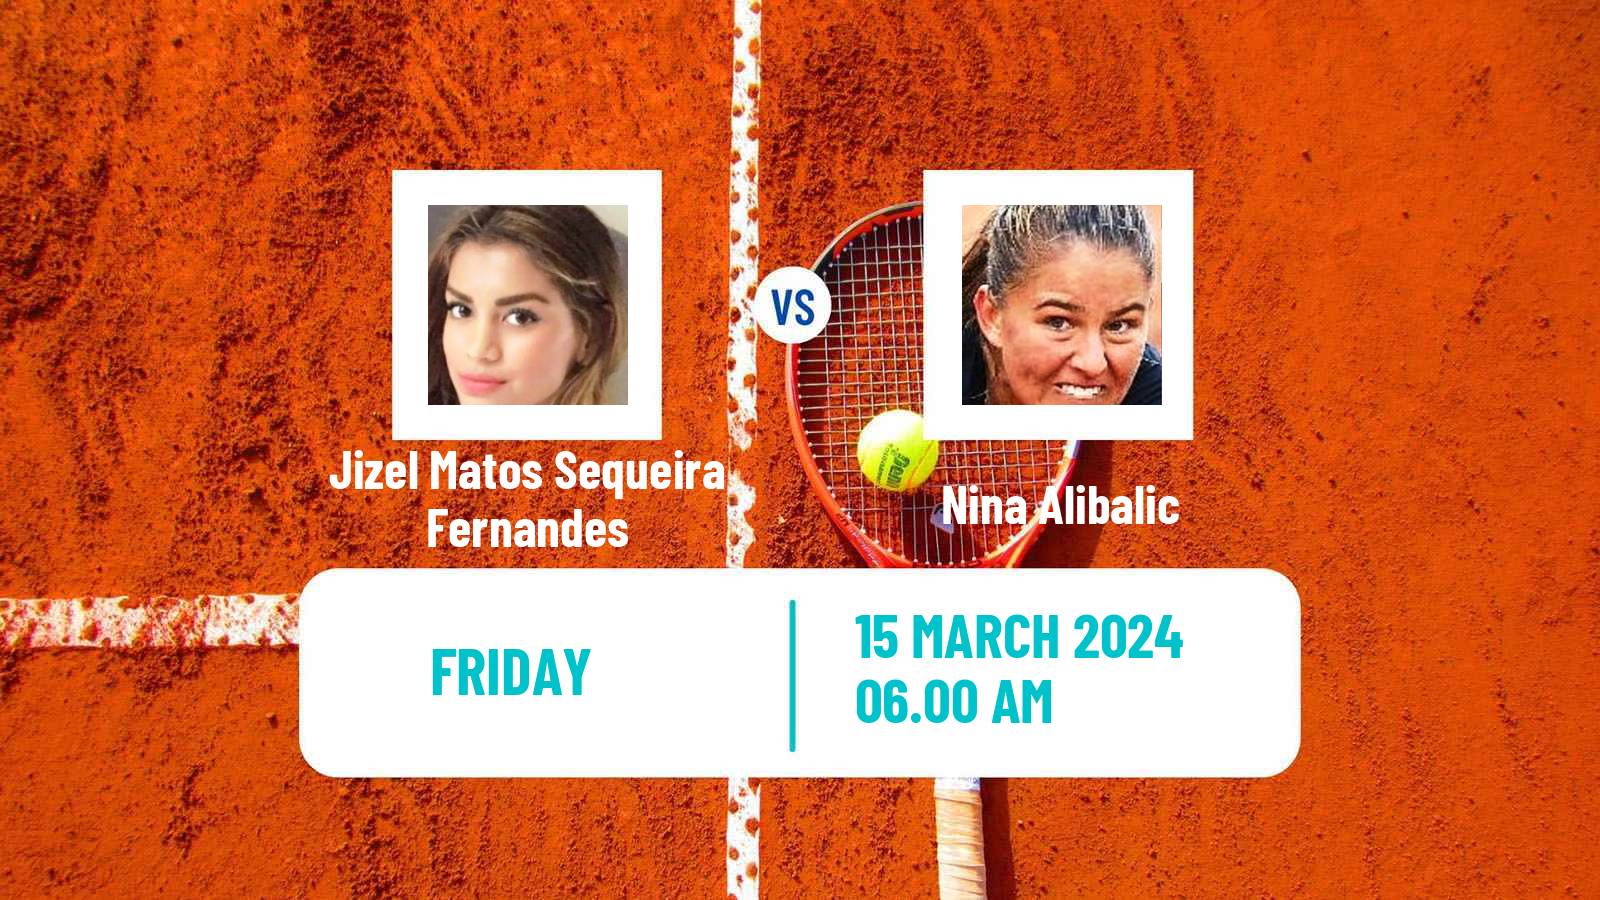 Tennis ITF W15 Antalya 5 Women Jizel Matos Sequeira Fernandes - Nina Alibalic